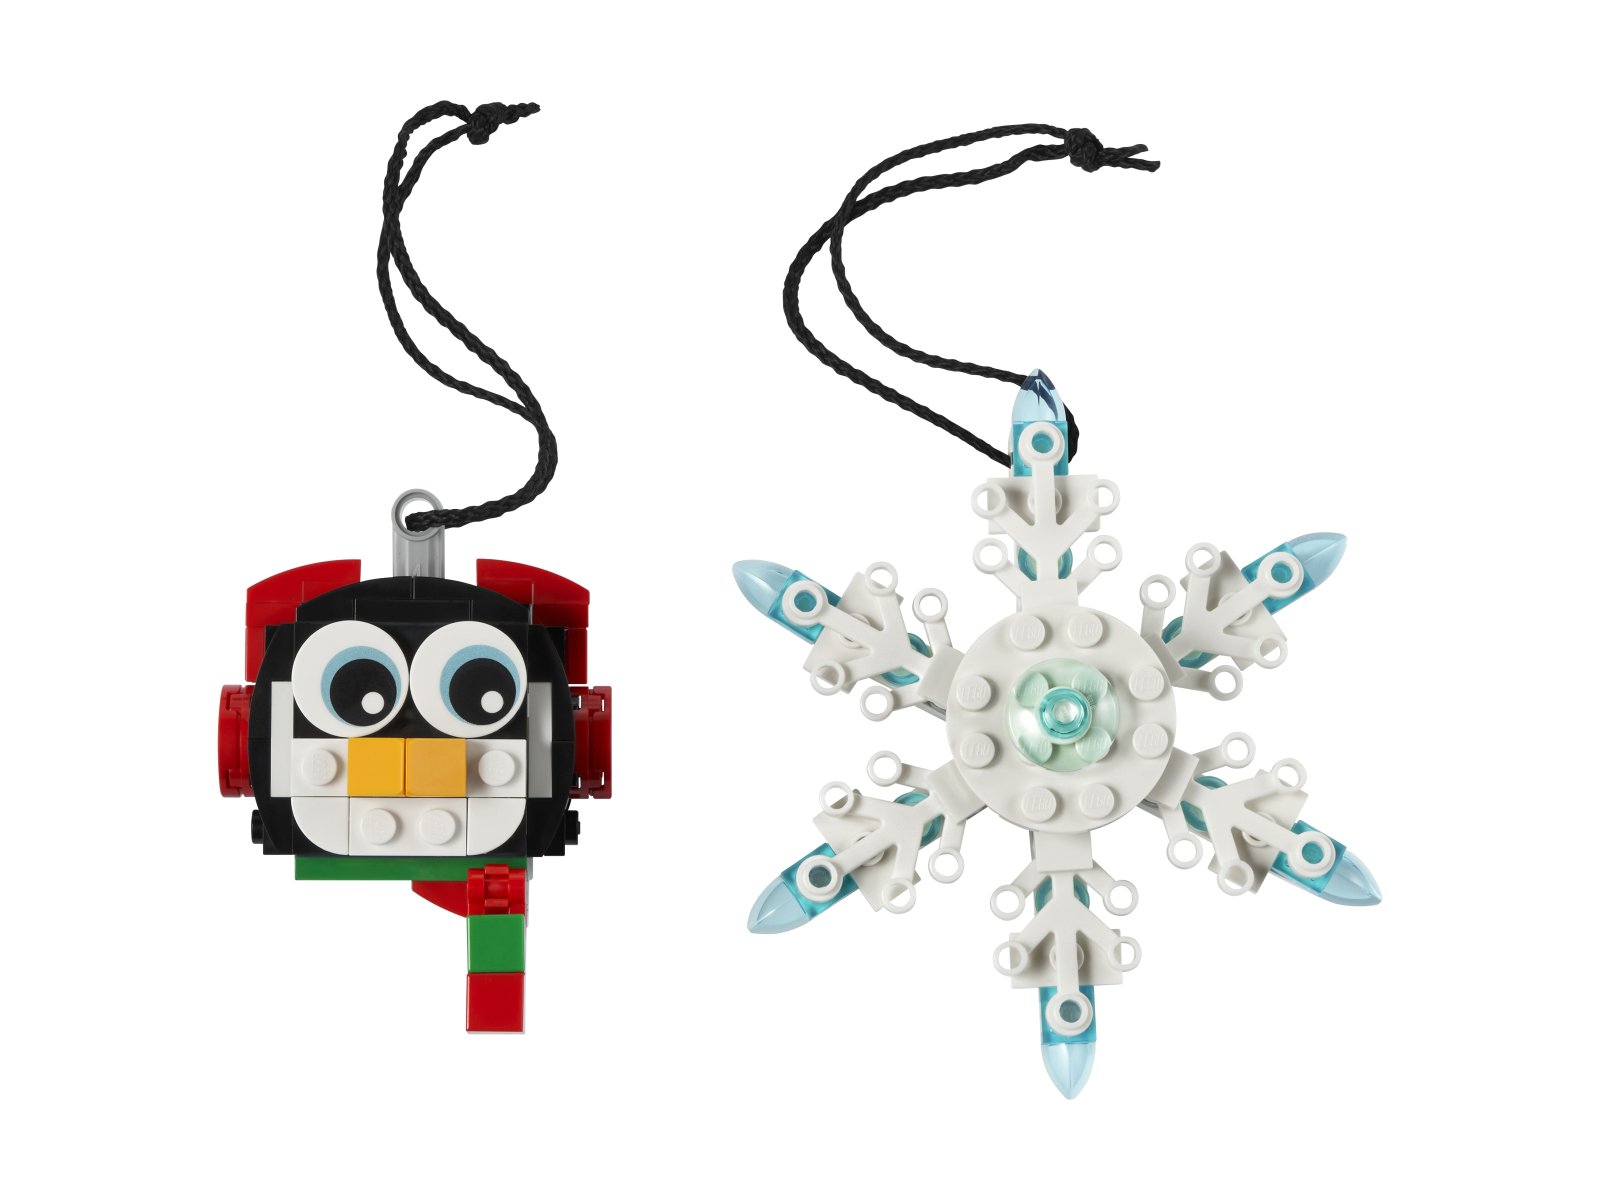 LEGO Pingwin i płatek śniegu 40572